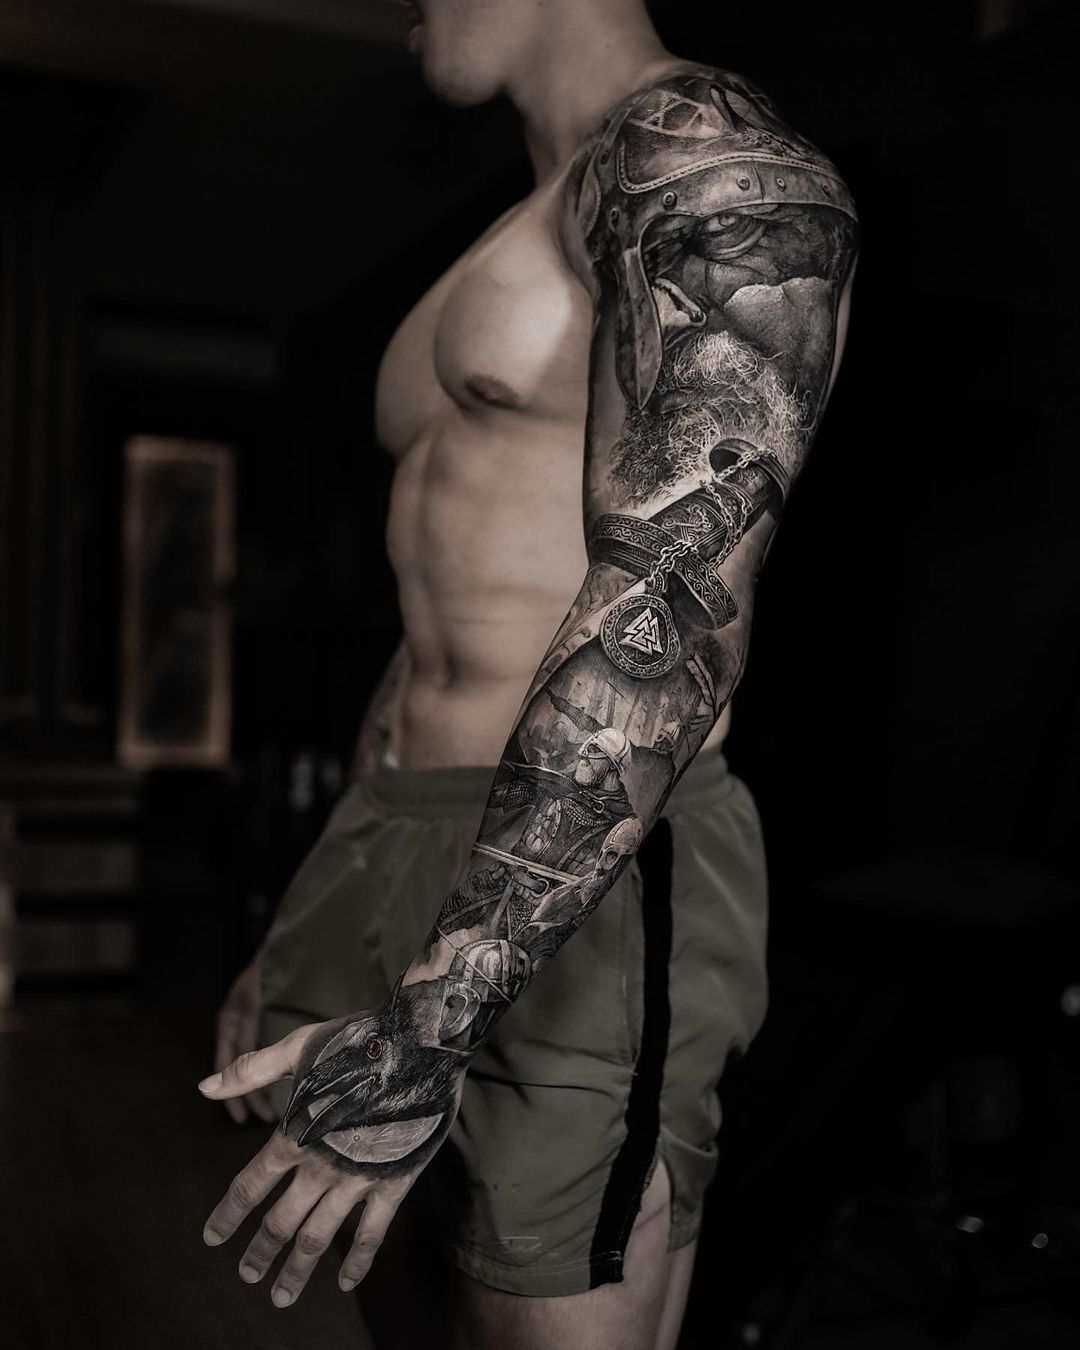 portrait tattoo on arm by mundo das tattoo